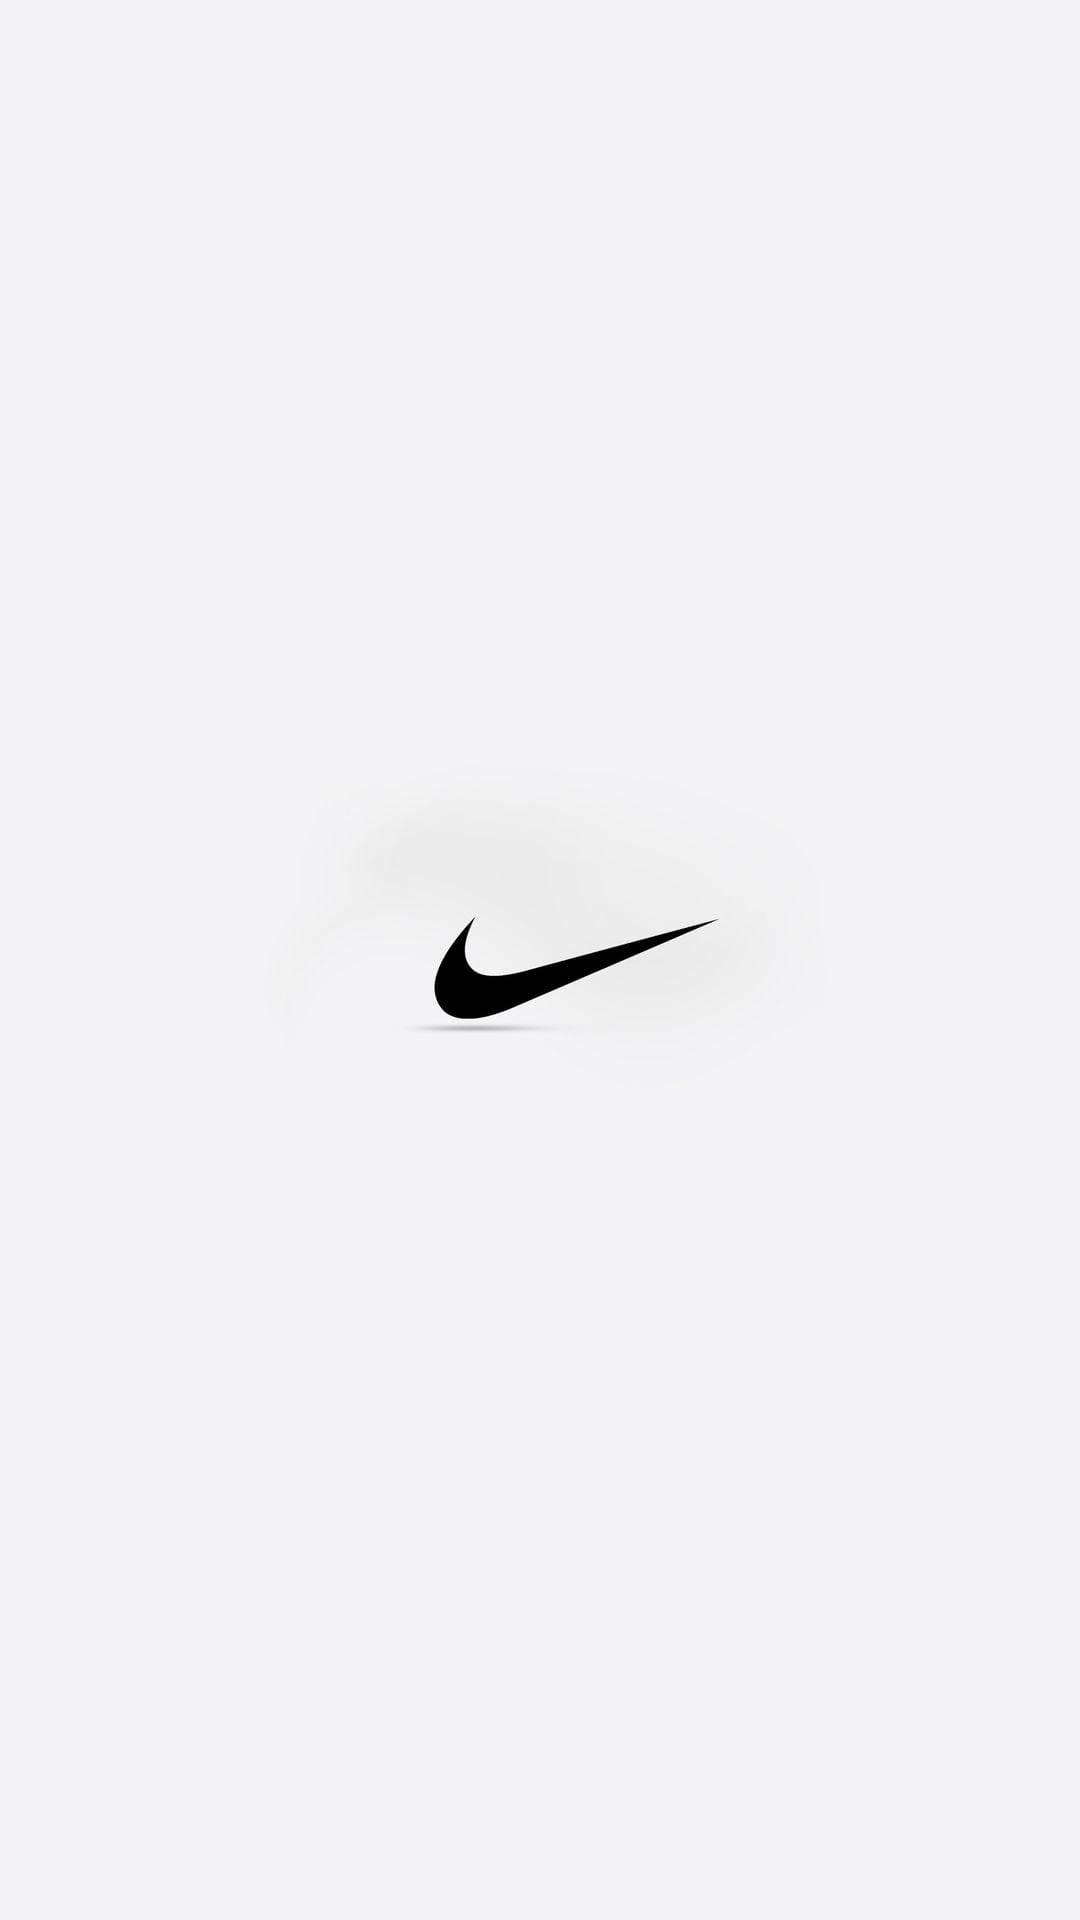 Cool White Nike Background